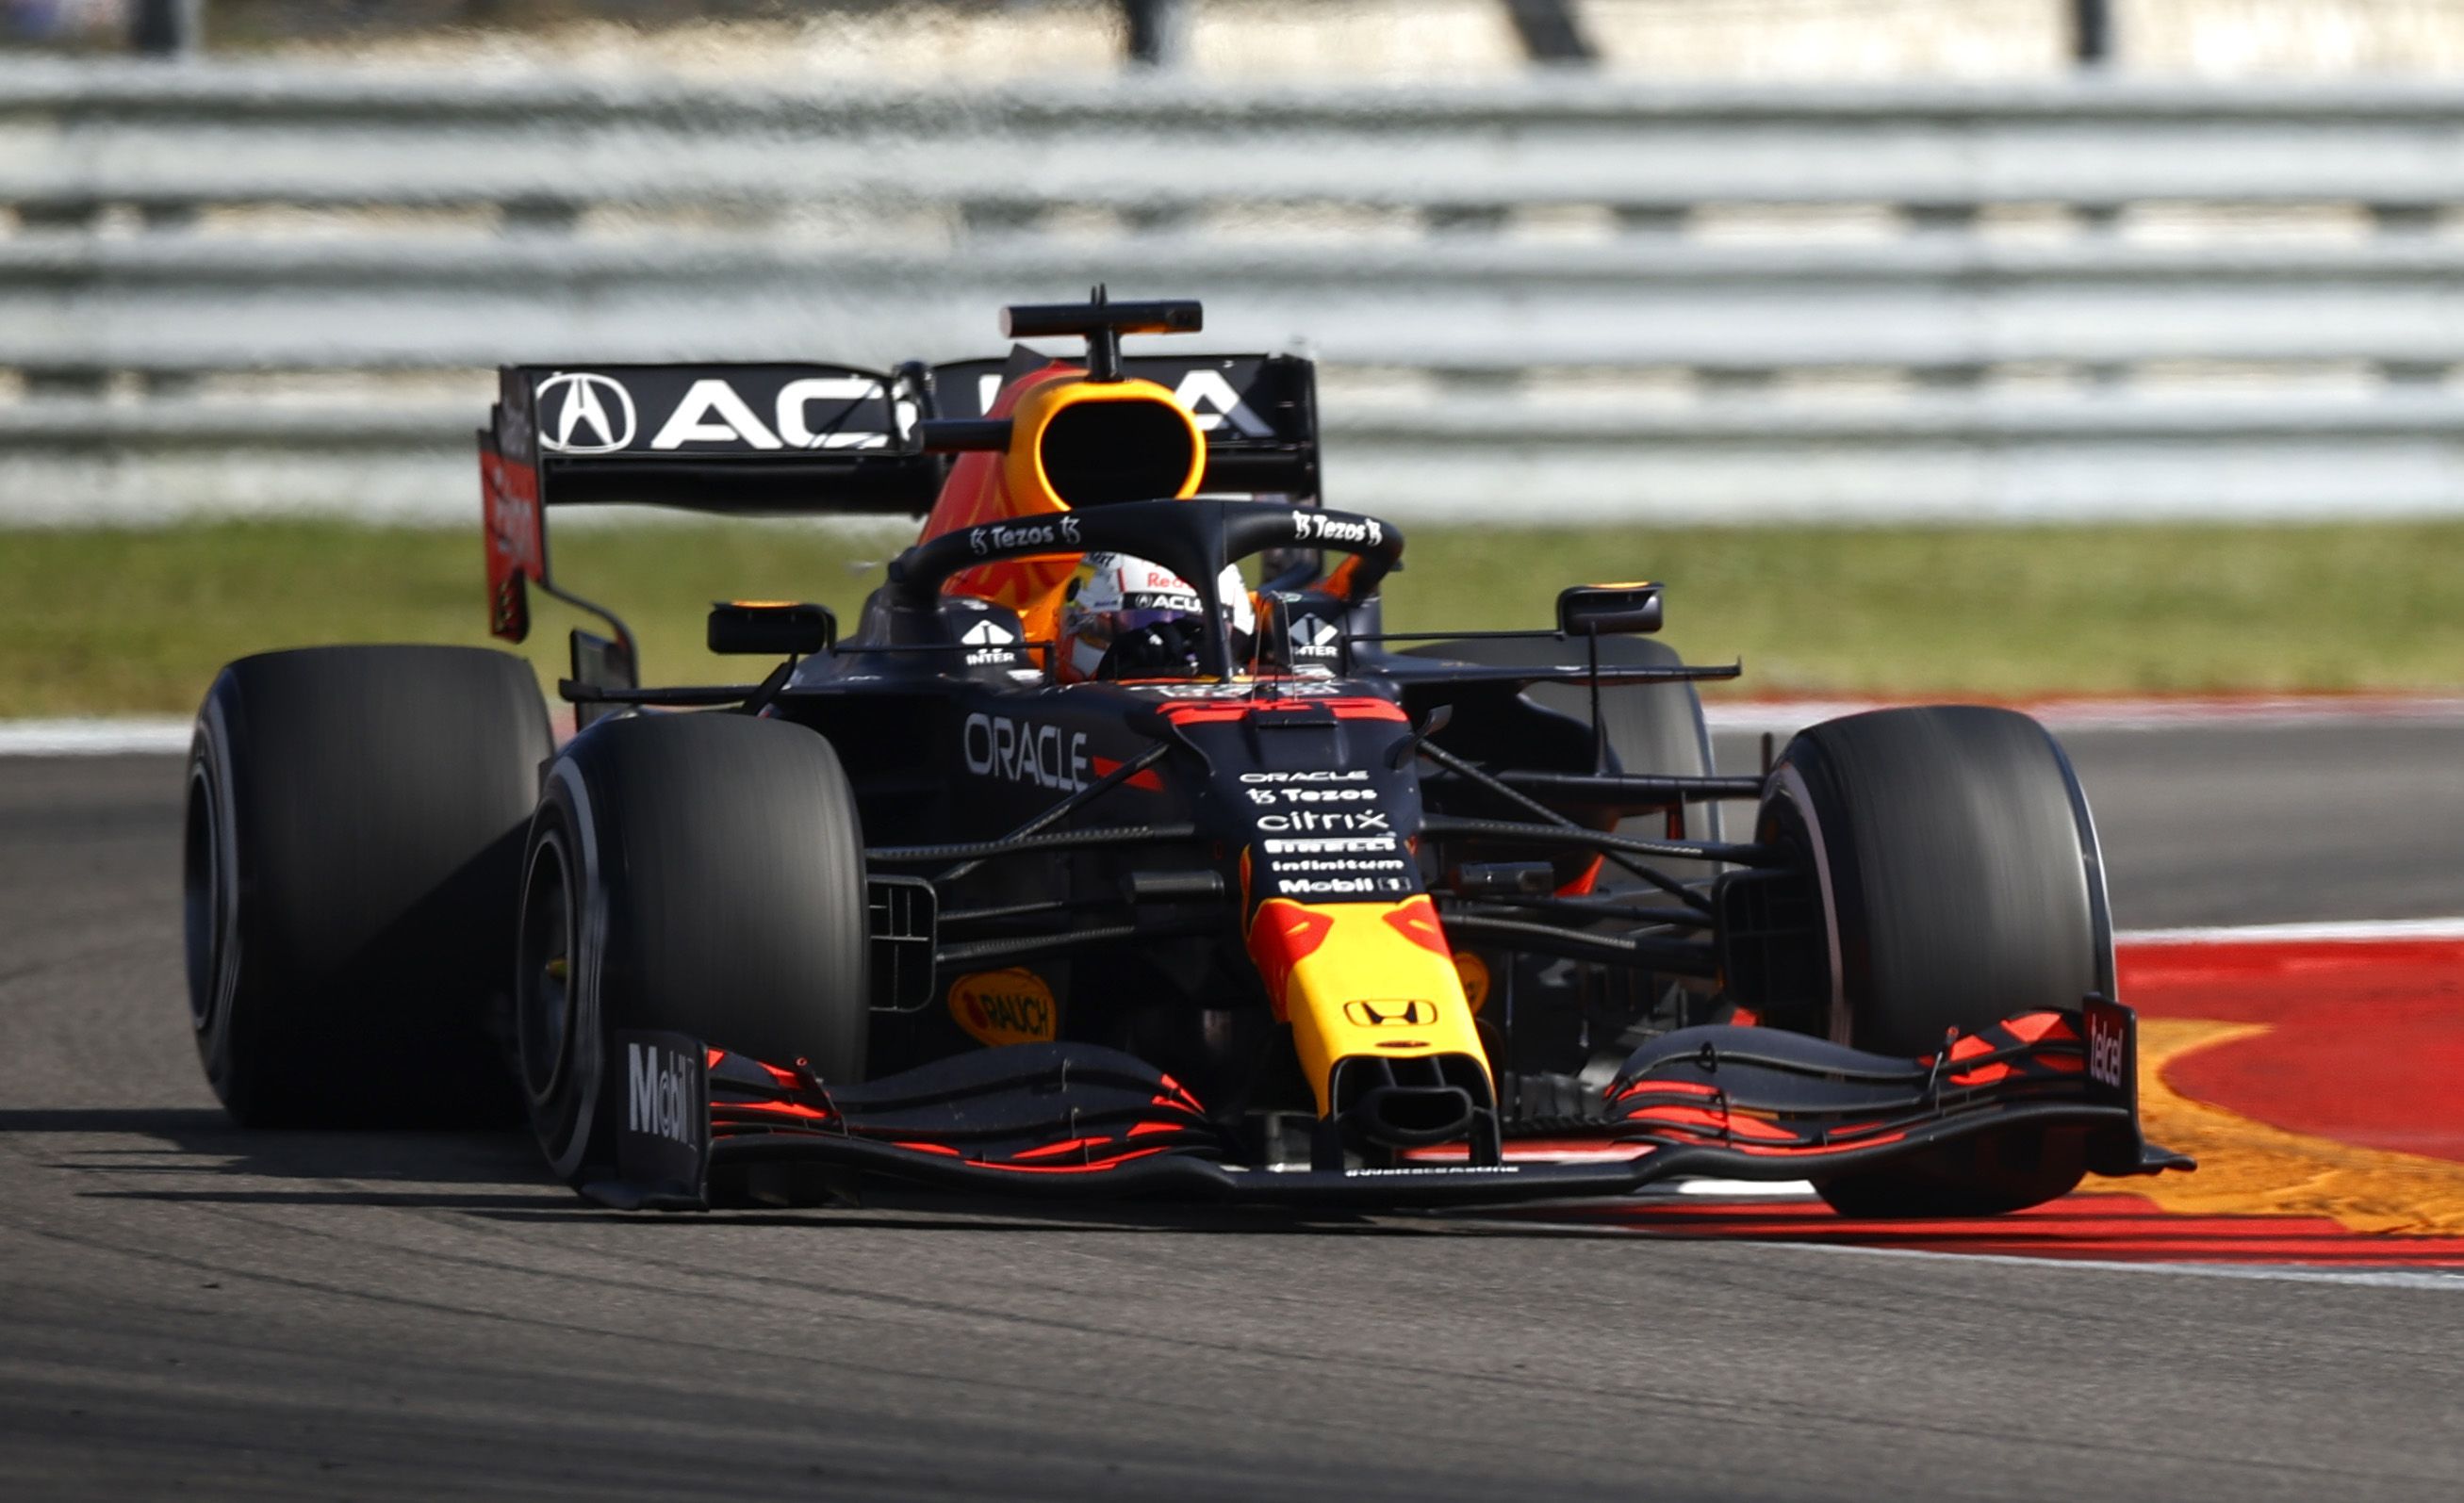 F1: Hamilton expects tough races ahead as Max Verstappen pulls away | CNN